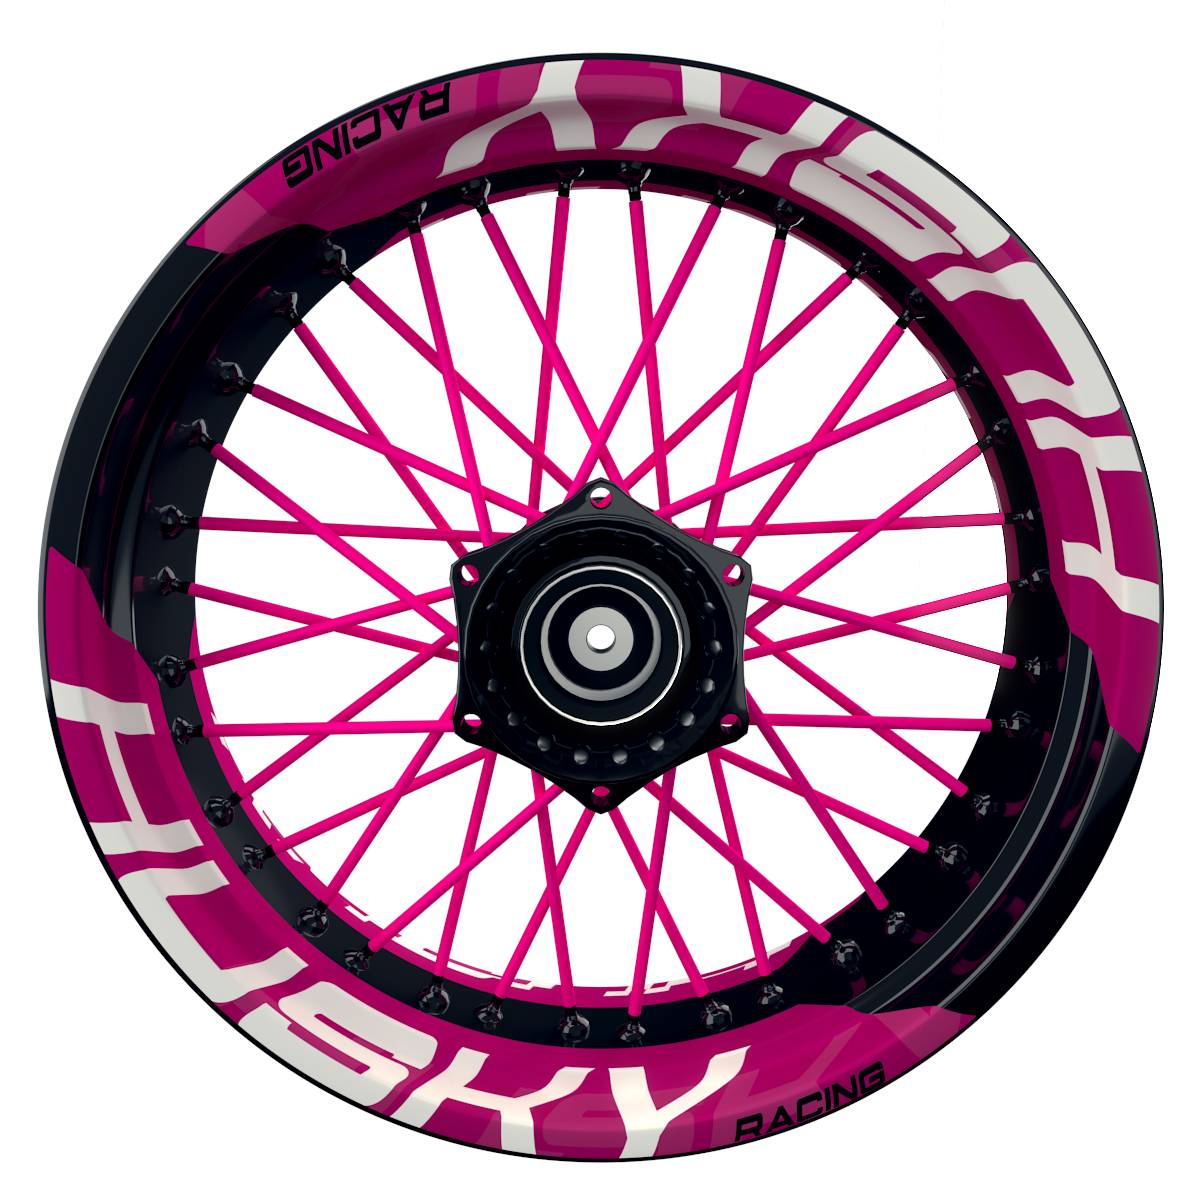 Wheelsticker Felgenaufkleber HUSKY Racing einfarbig V2 pink Frontansicht